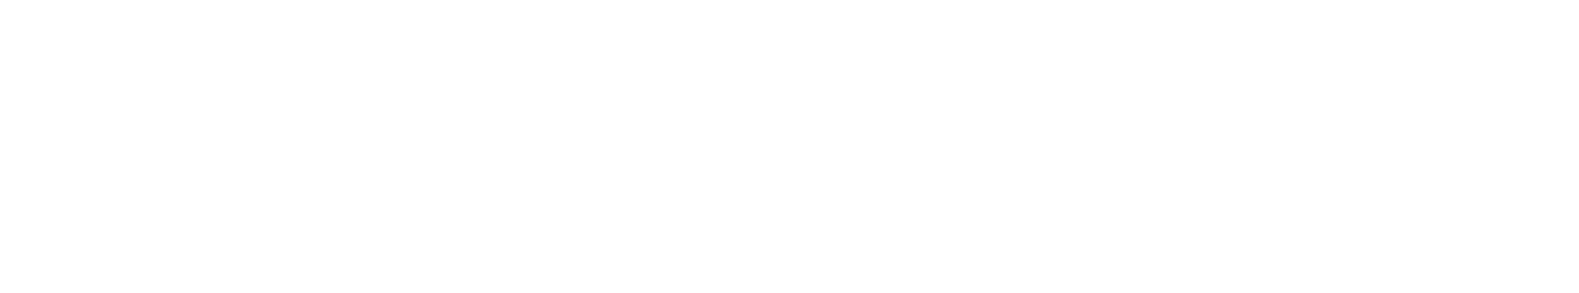 NetEase Logo groß für dunkle Hintergründe (transparentes PNG)